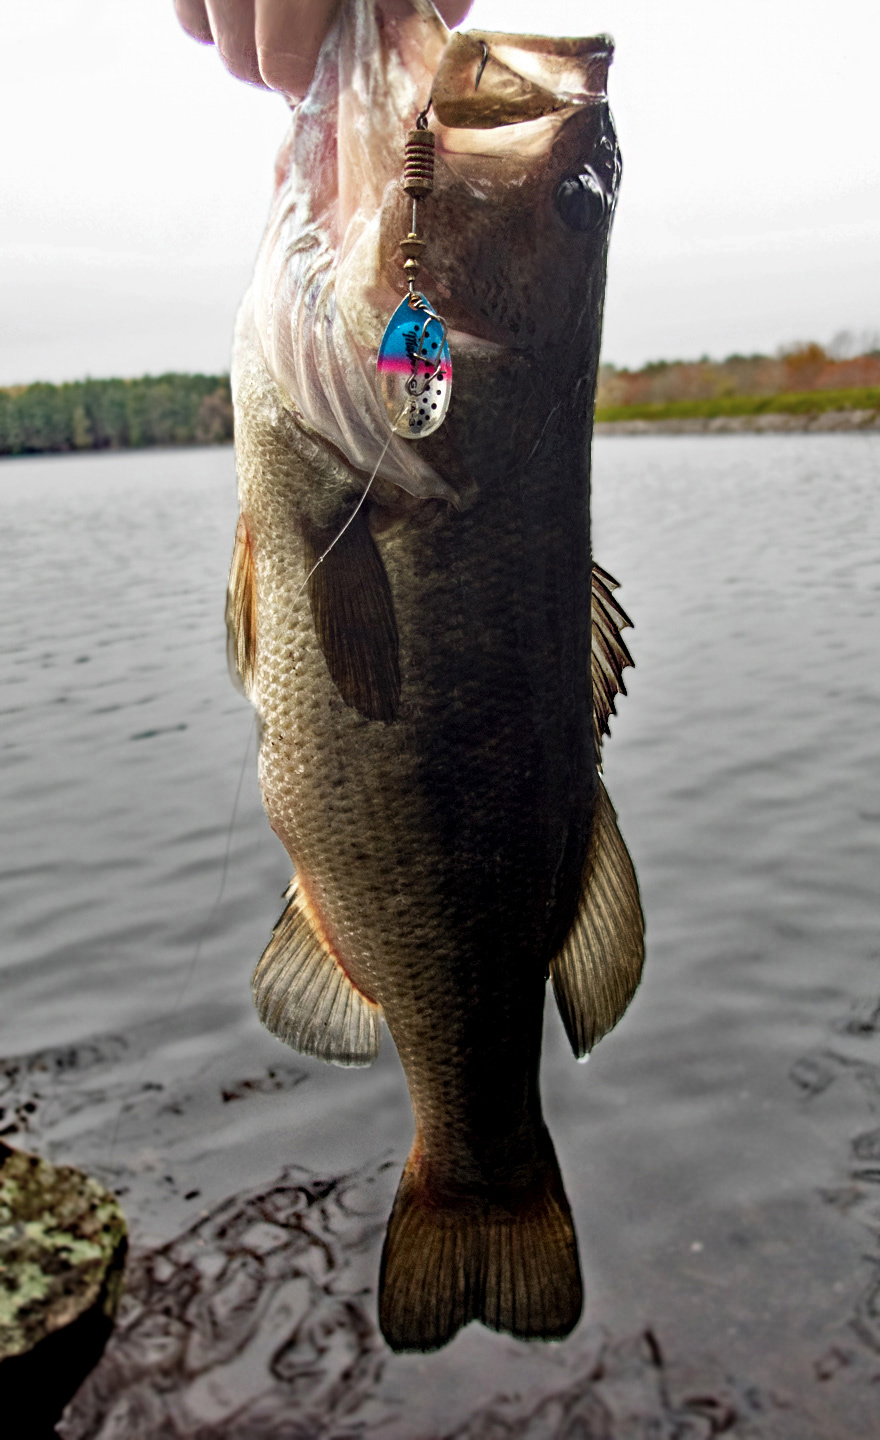 Bass at the Ashland Reservoir